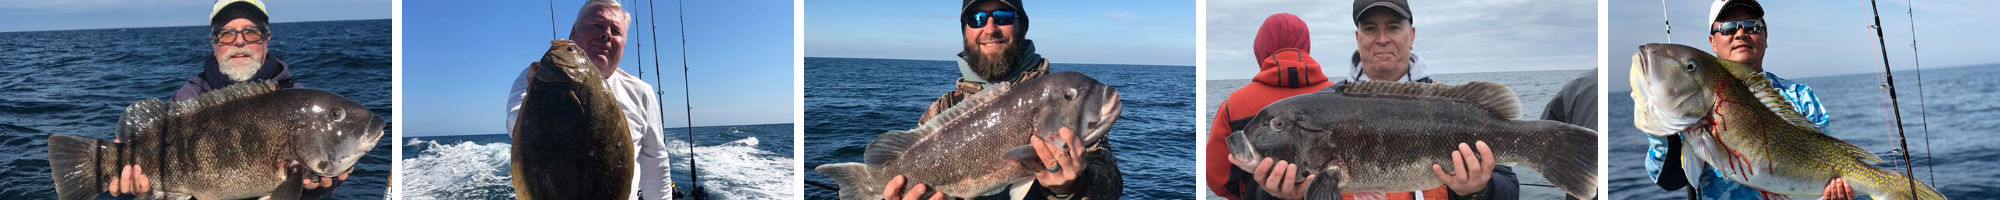 Ocean City Maryland Fishig Reports. Fish Bound Charters - Tog Fishing Reports, Flounder Fishing Reports, Sea Bass Fishing Reports